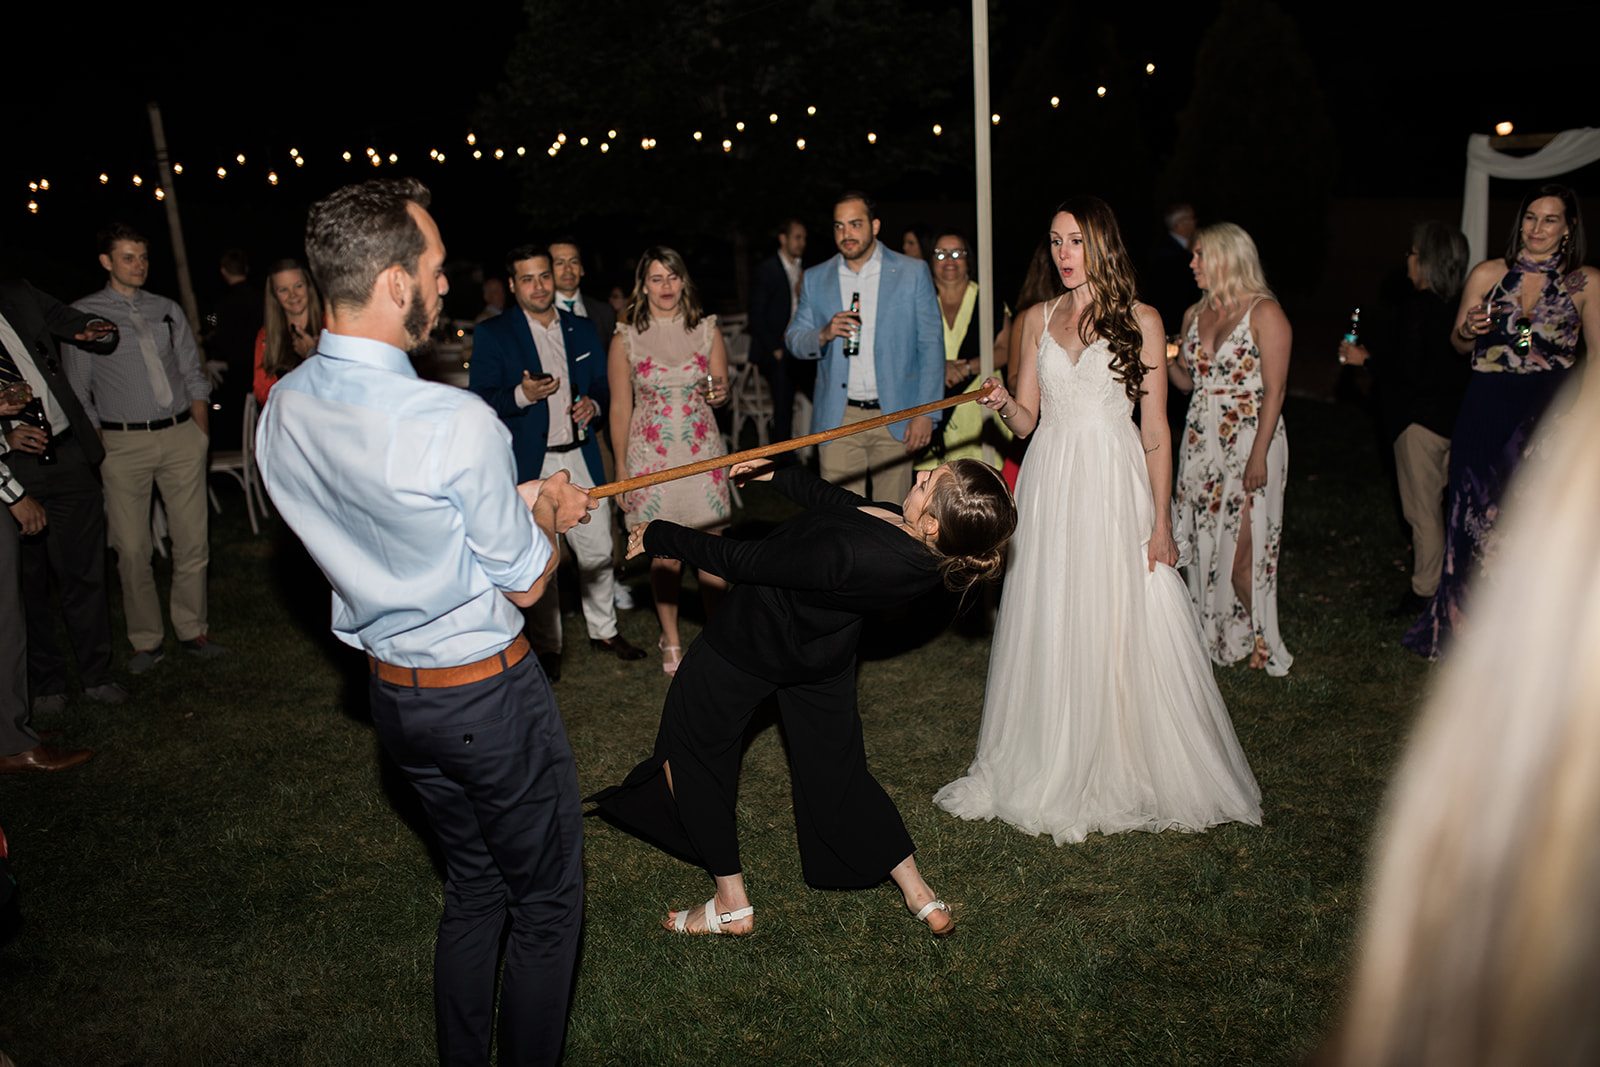 guests enjoy dancing at reception